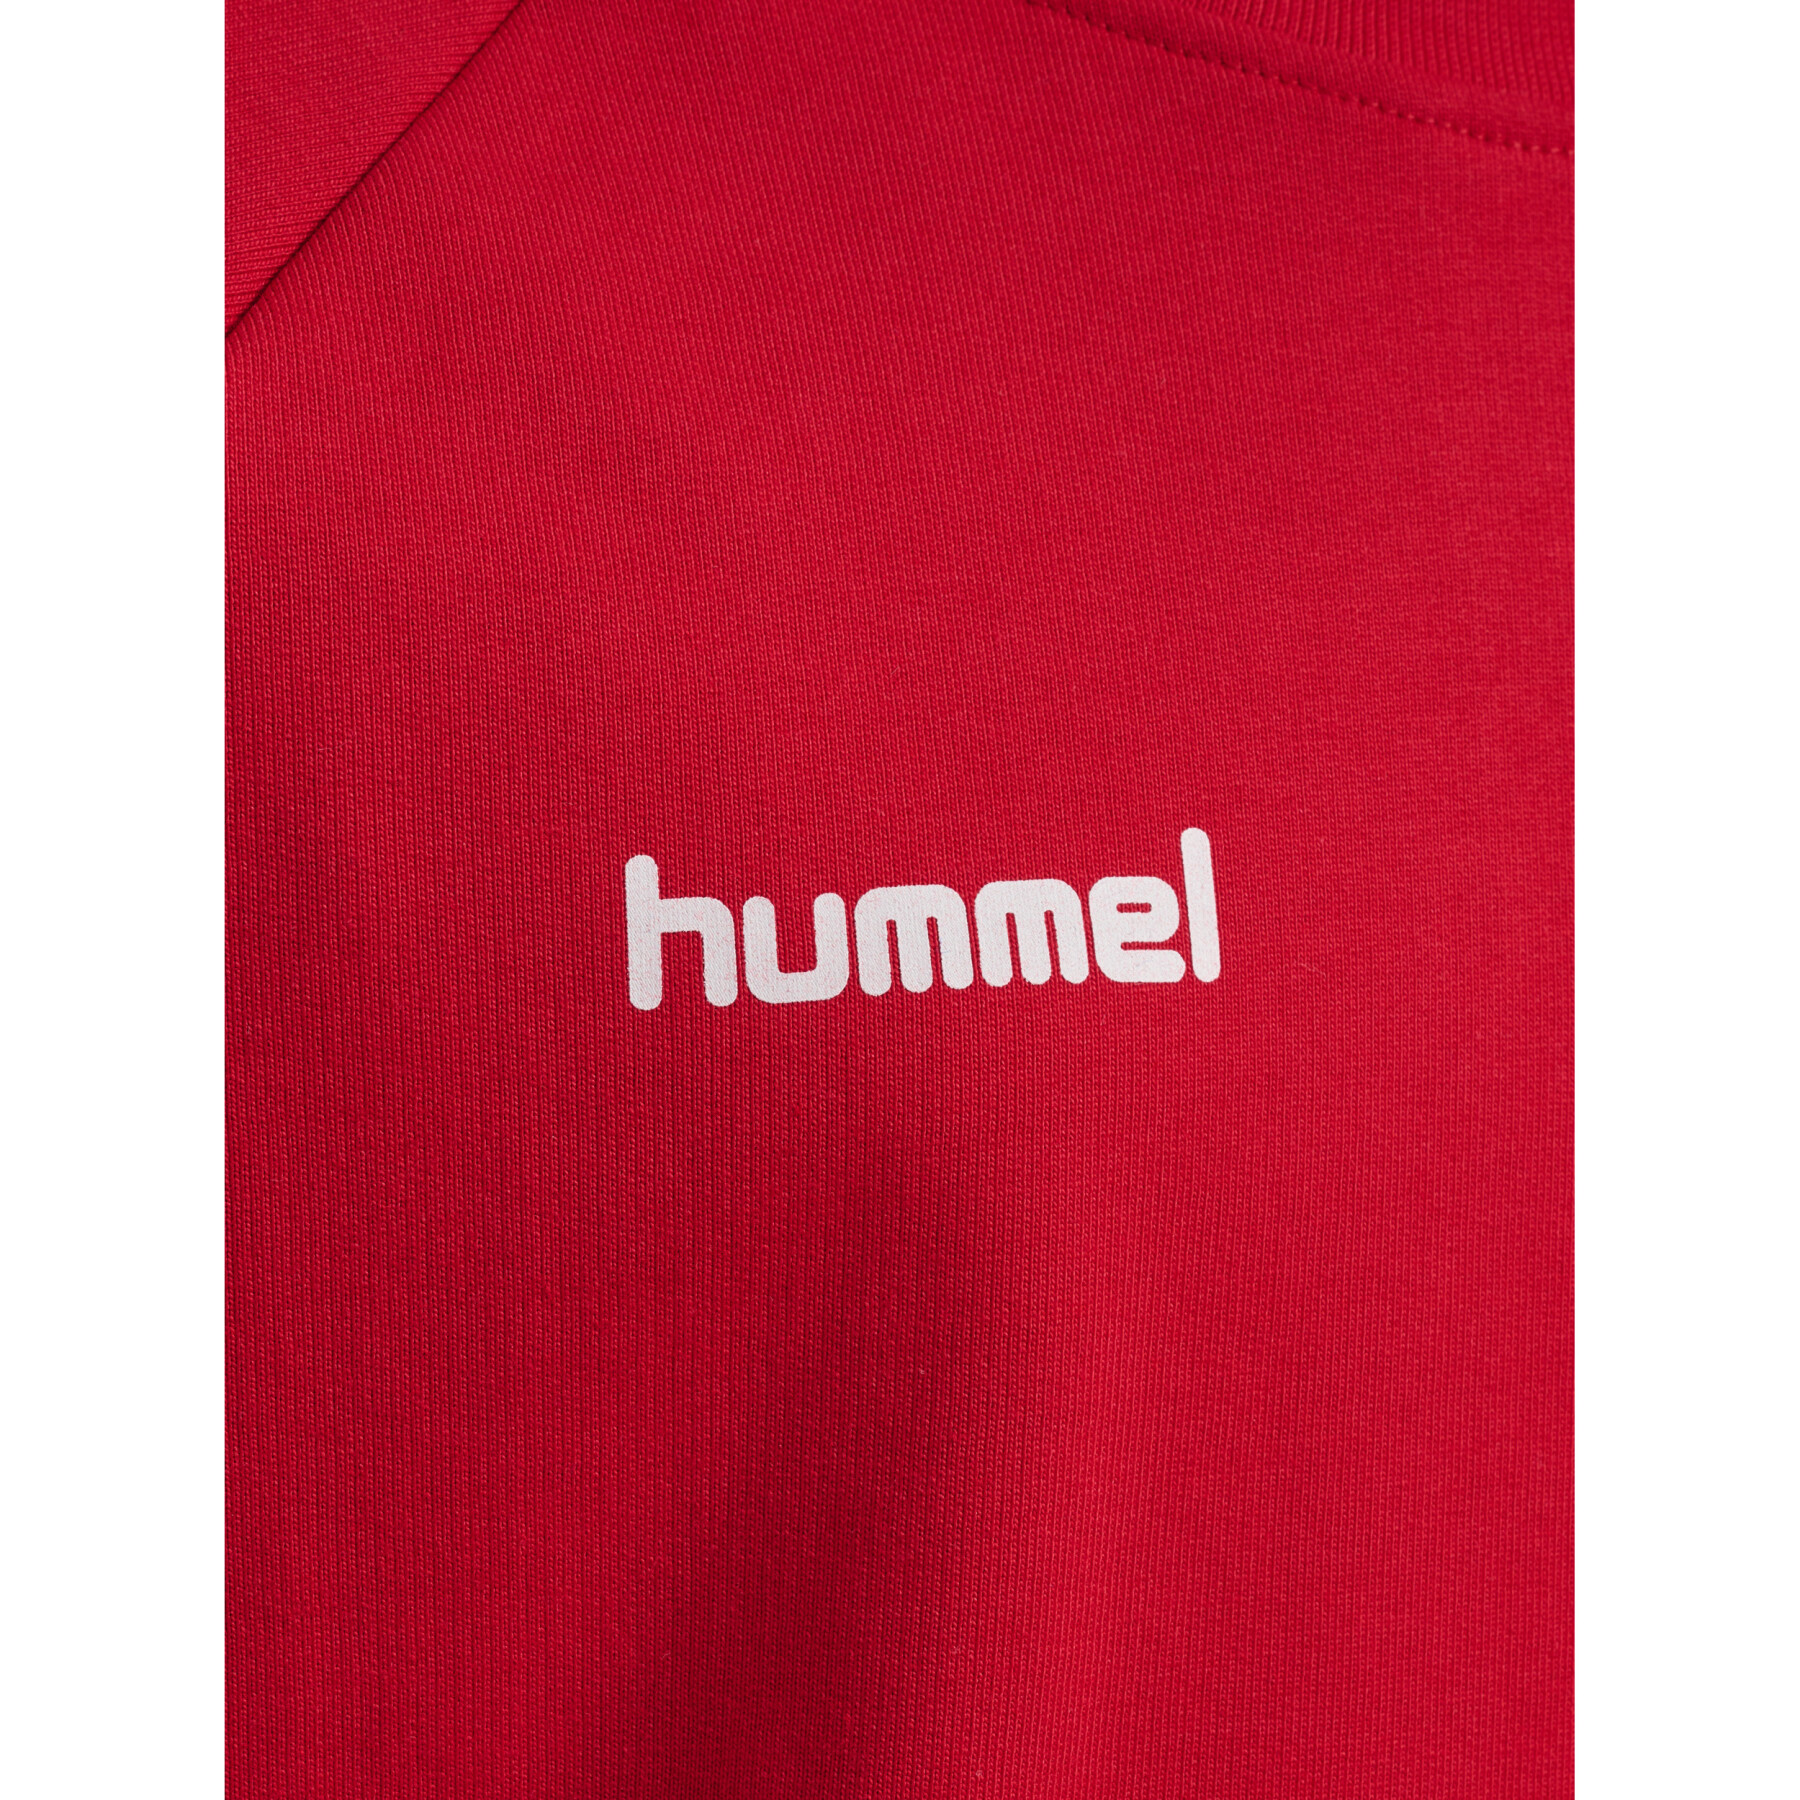 Pullover Kind Hummel hmlGO cotton